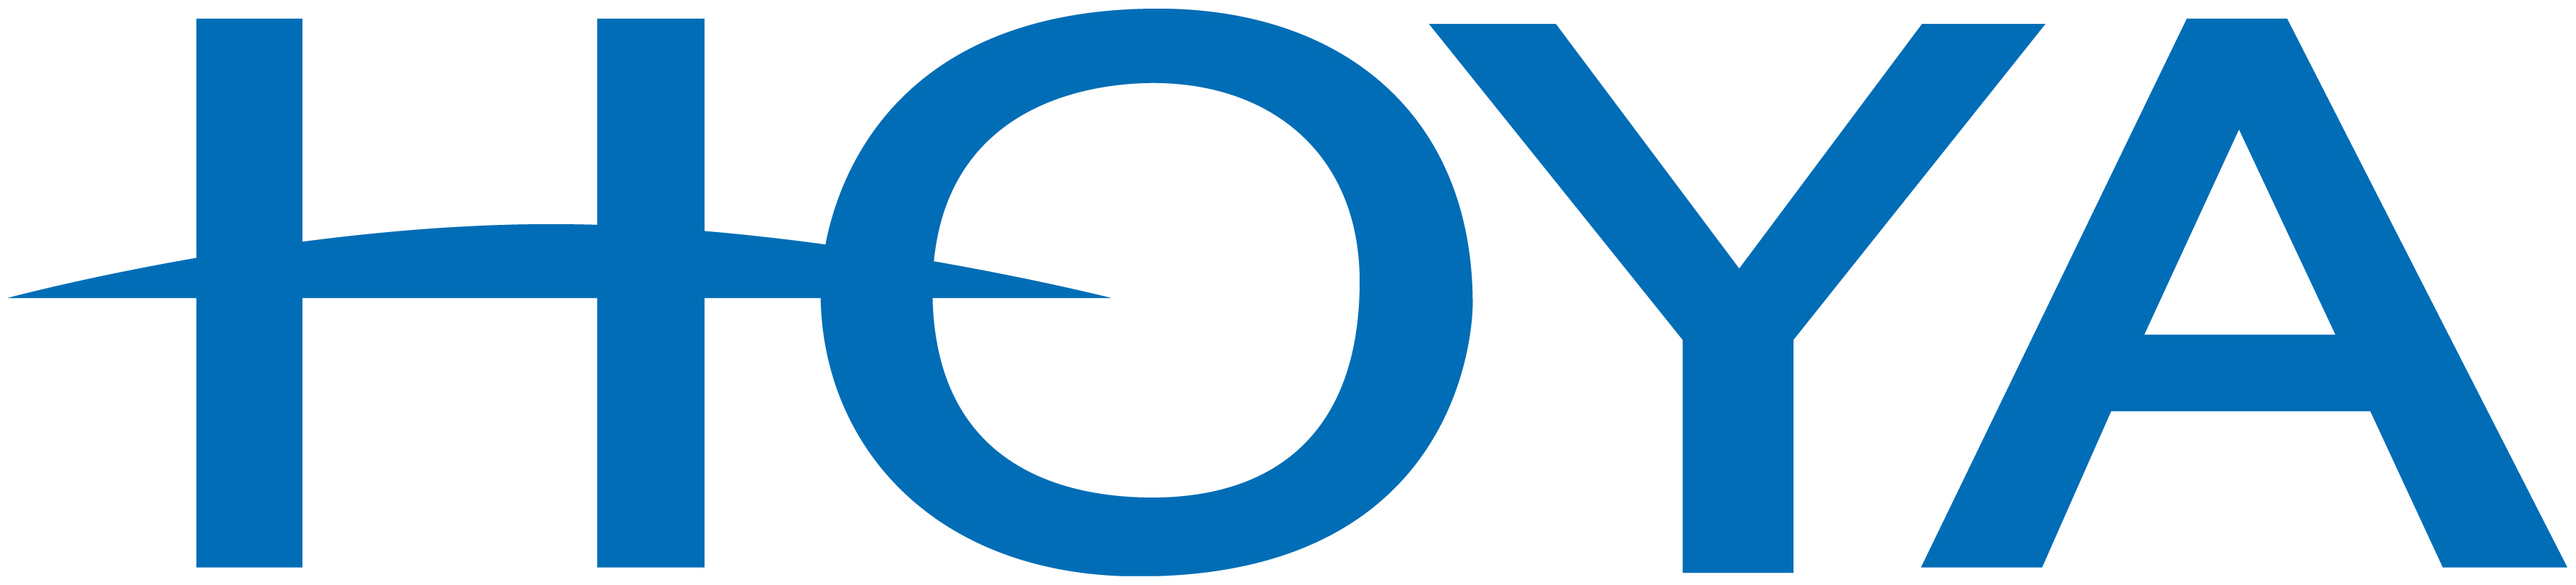 Hoya lens